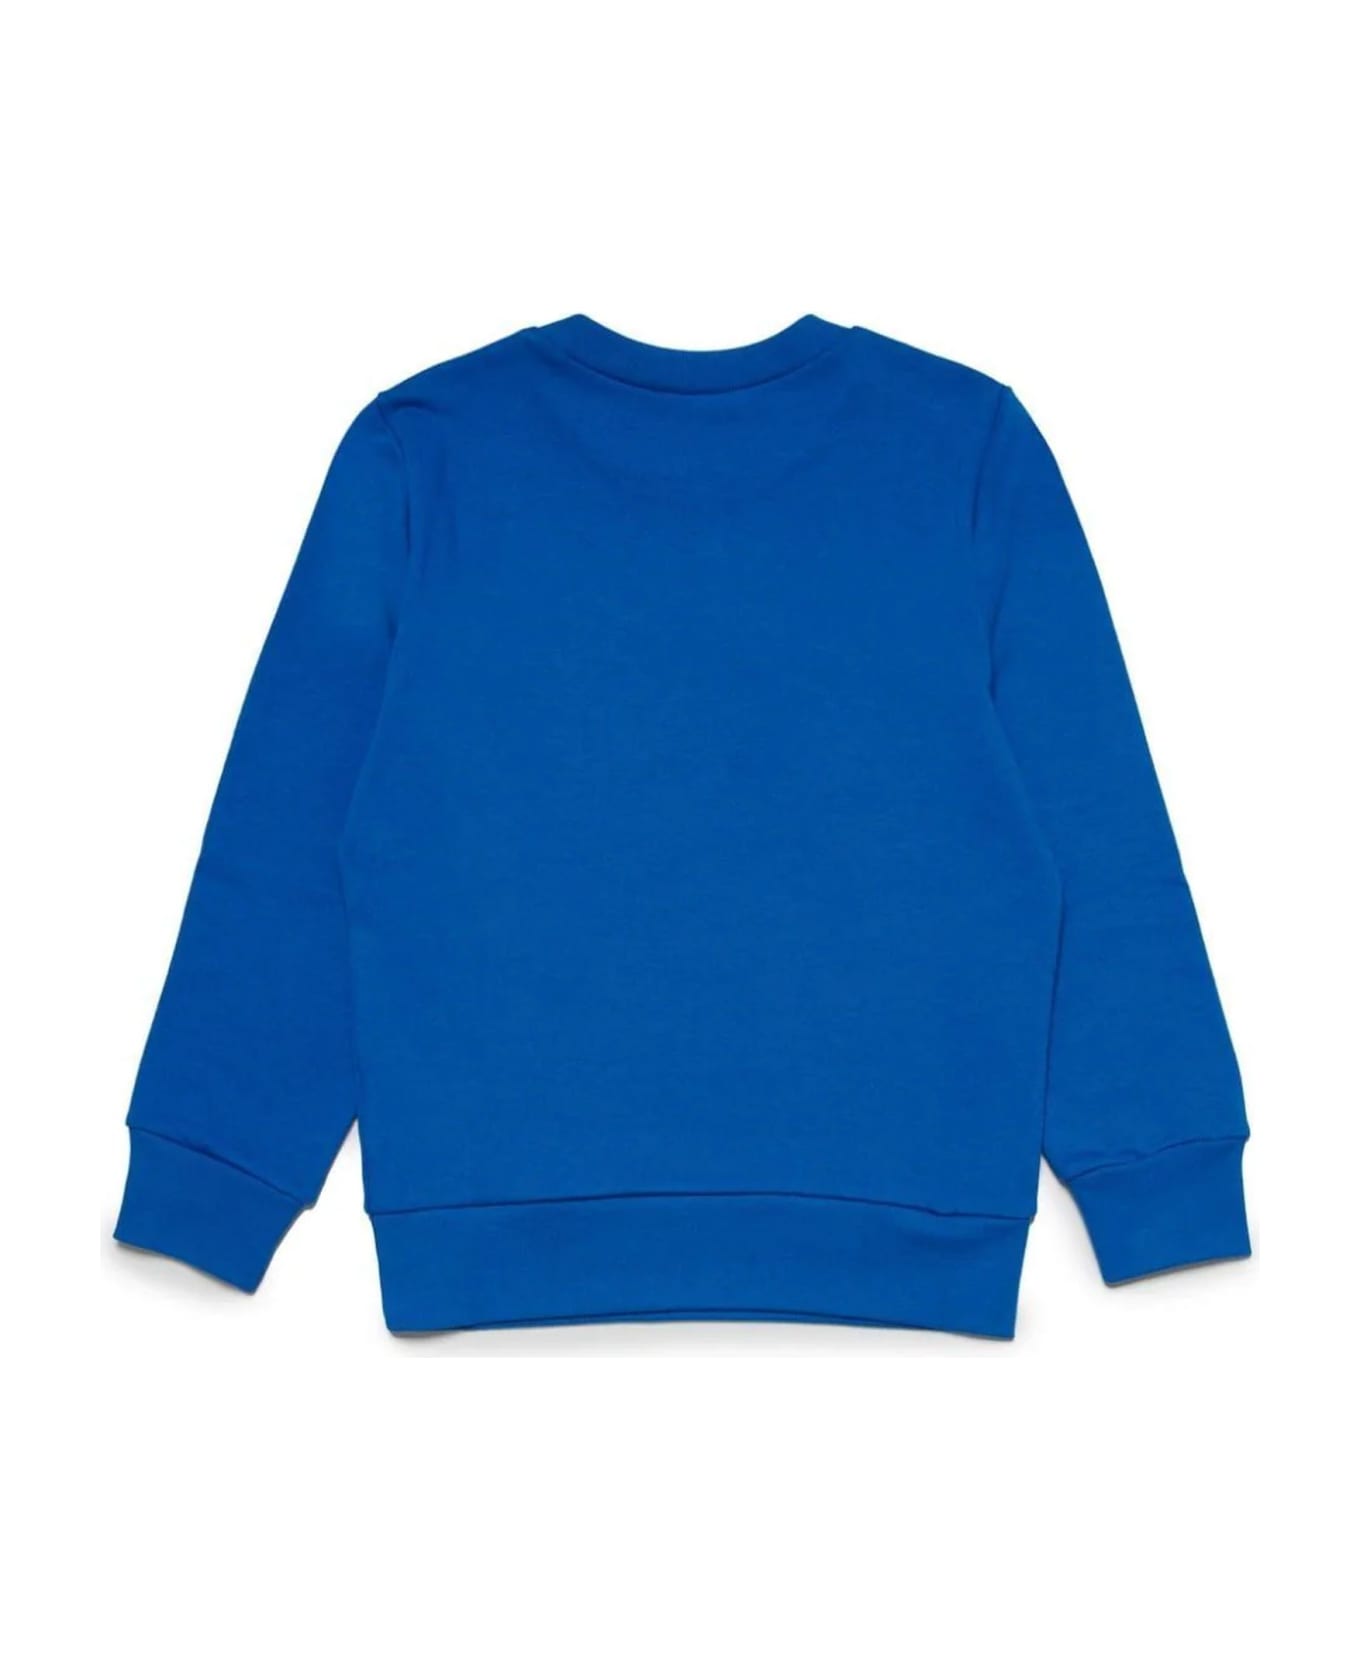 N.21 N°21 Sweaters Blue - Blue